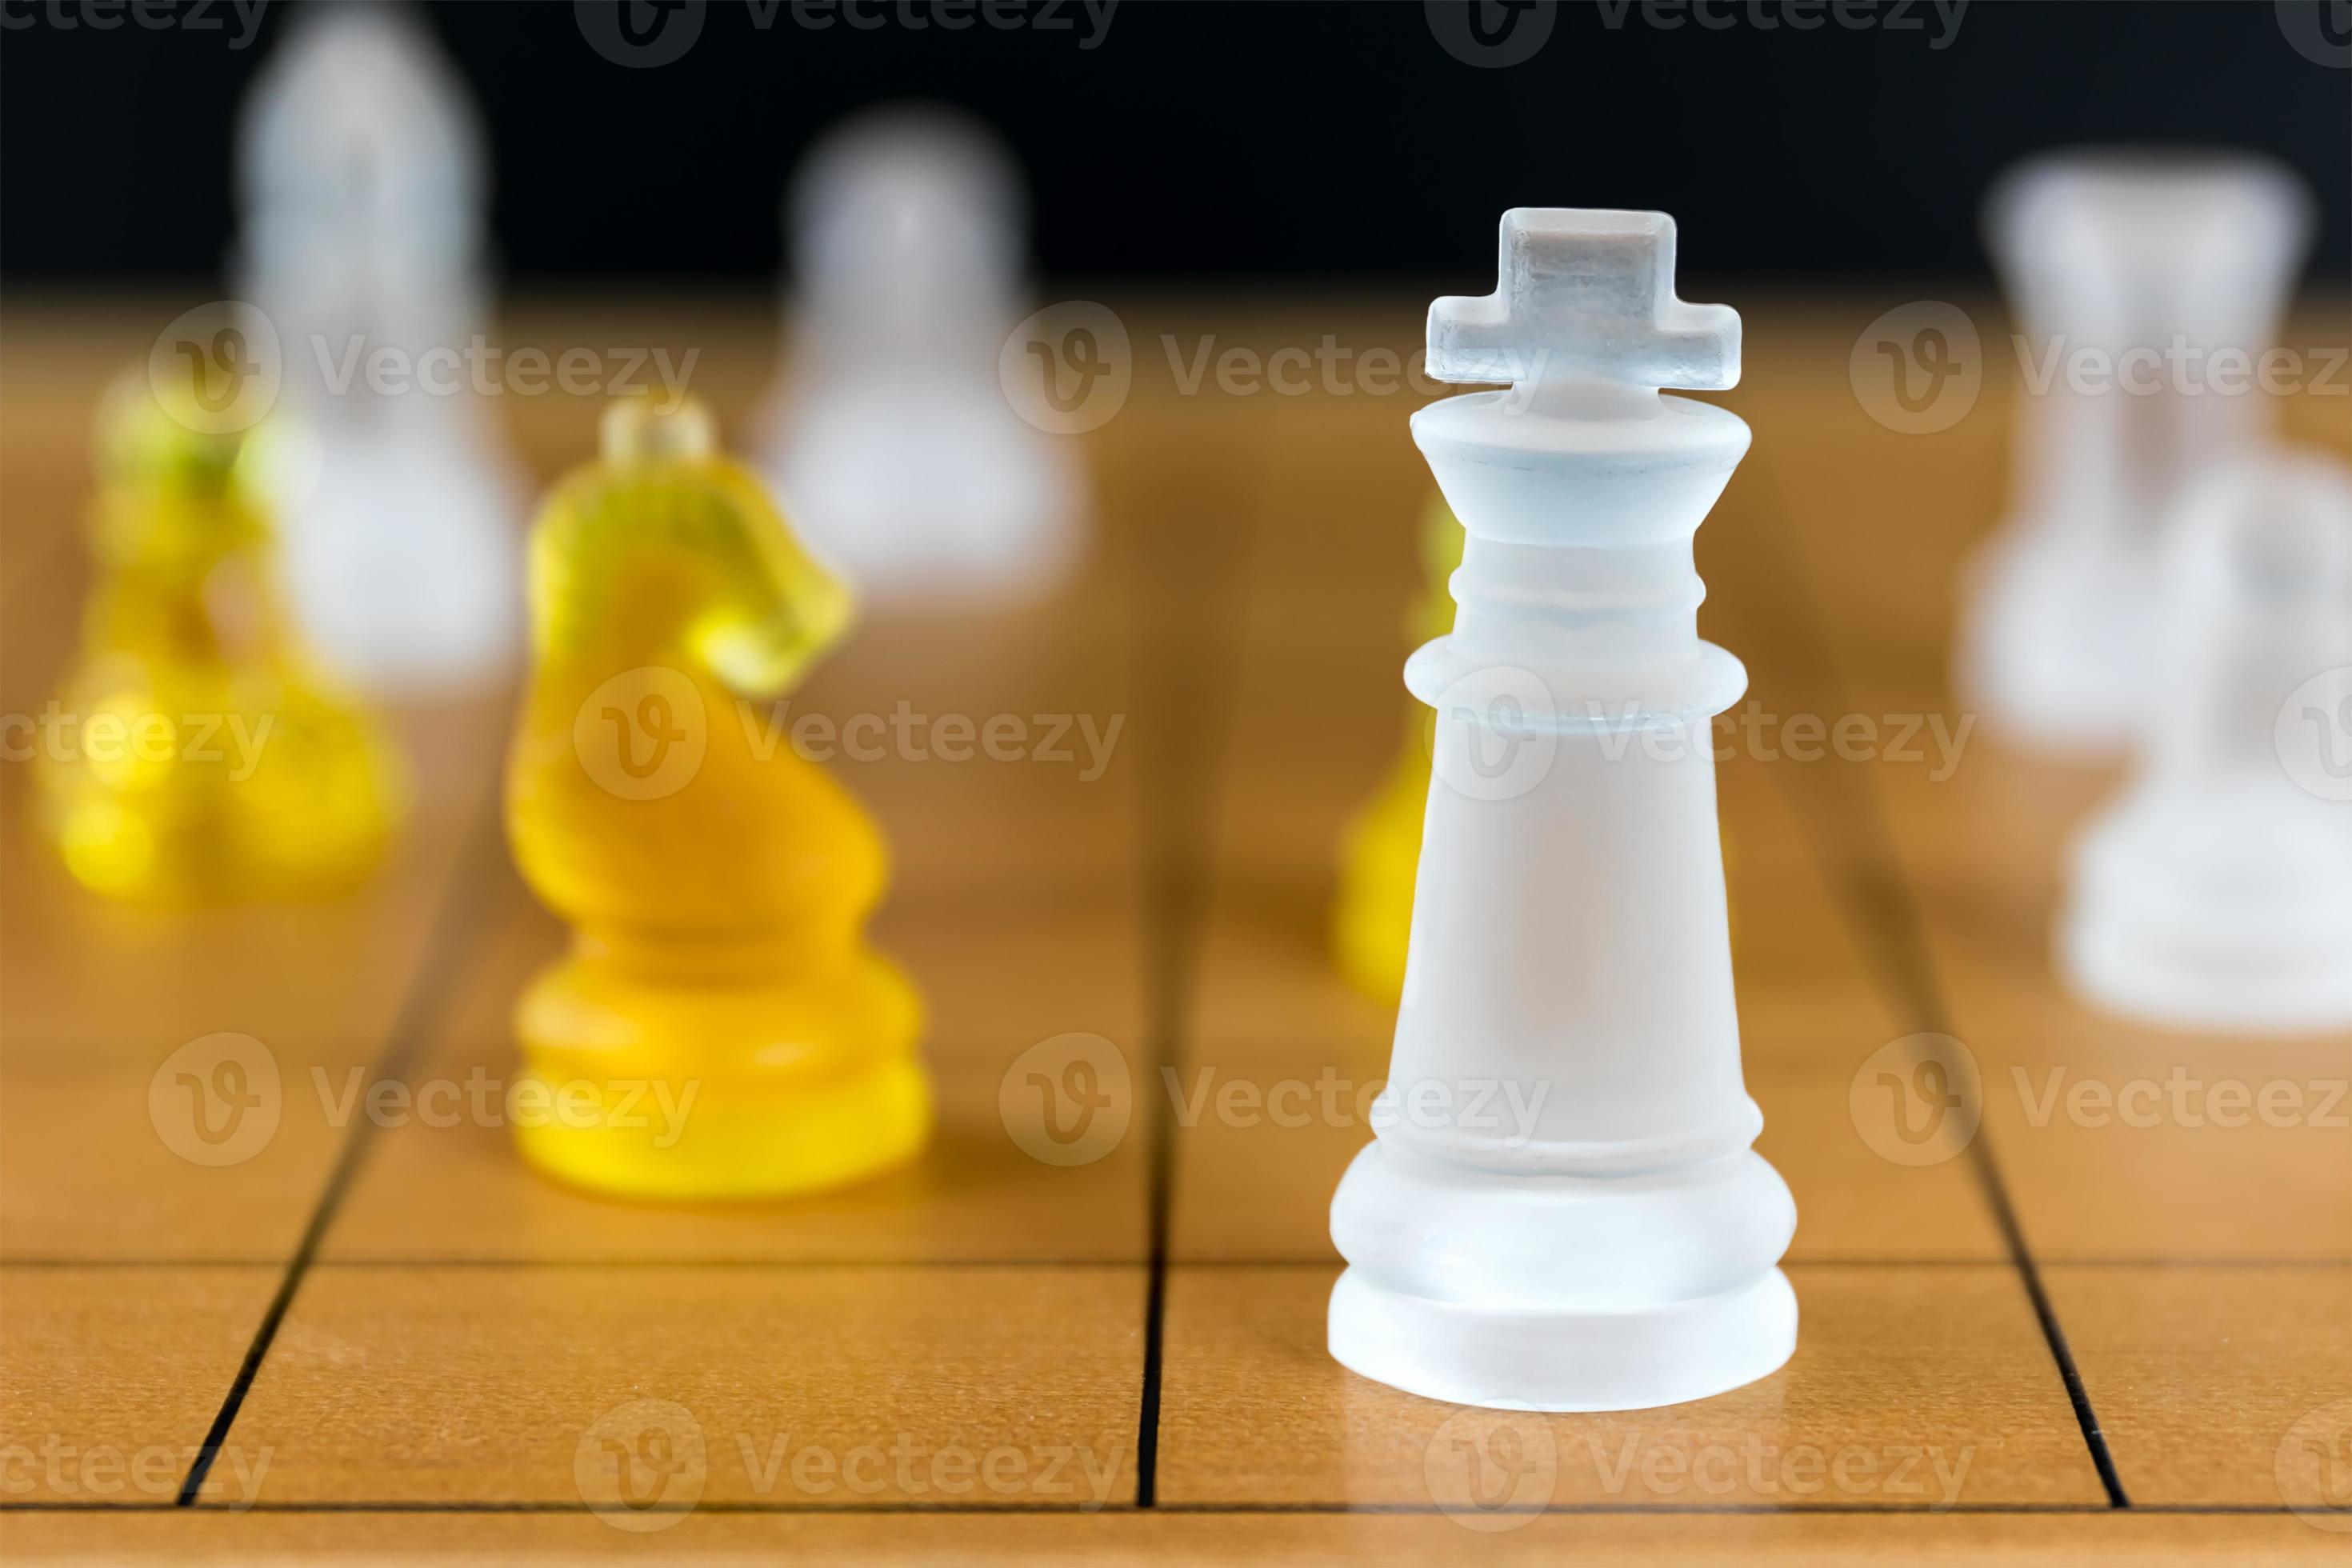 vidro de xadrez em um tabuleiro de xadrez de madeira 20314313 Foto de stock  no Vecteezy